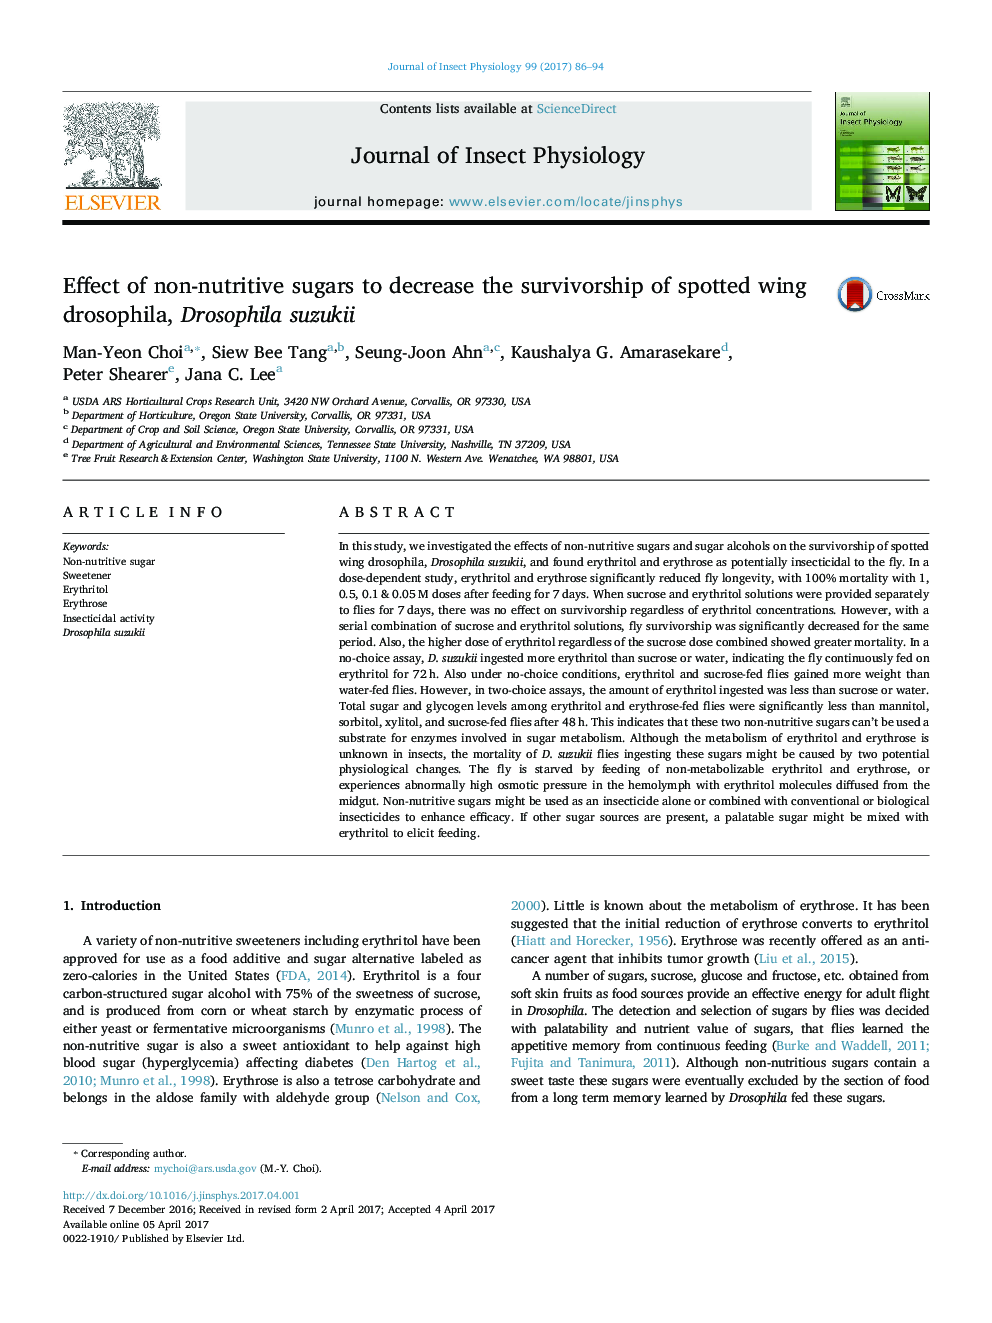 Effect of non-nutritive sugars to decrease the survivorship of spotted wing drosophila, Drosophila suzukii